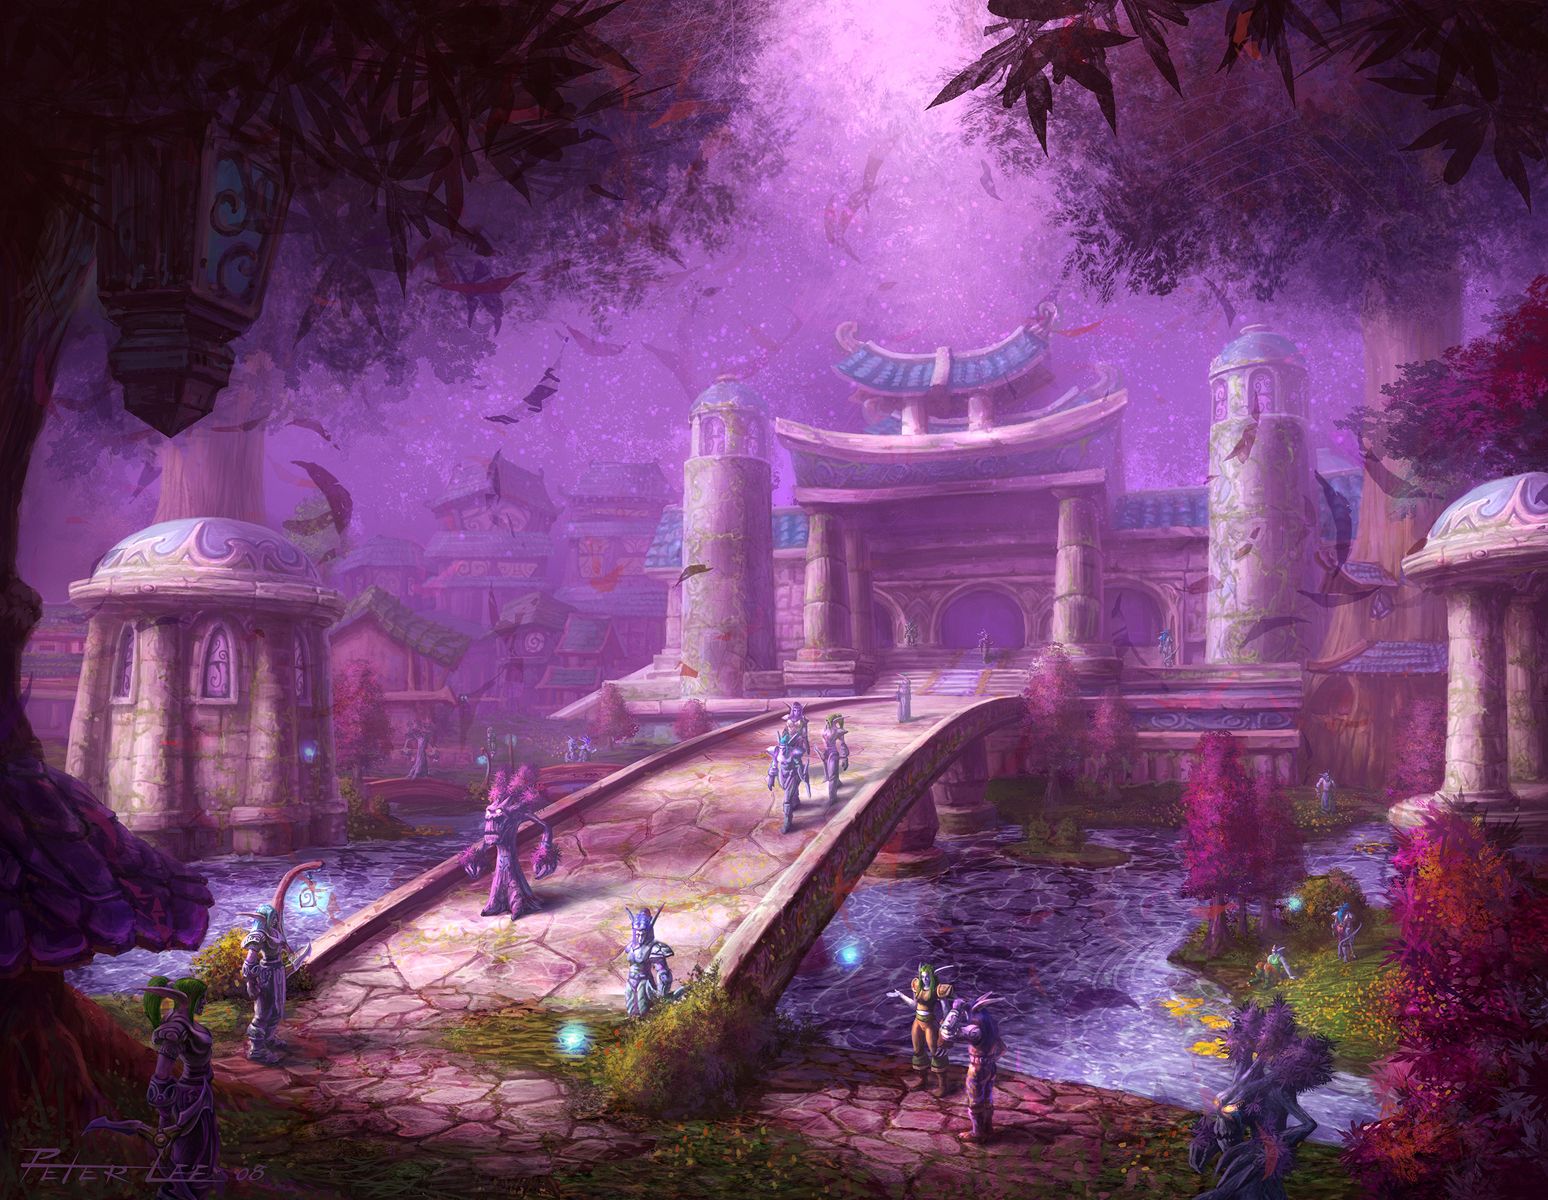 night elf wallpaper,purple,violet,cg artwork,illustration,adventure game